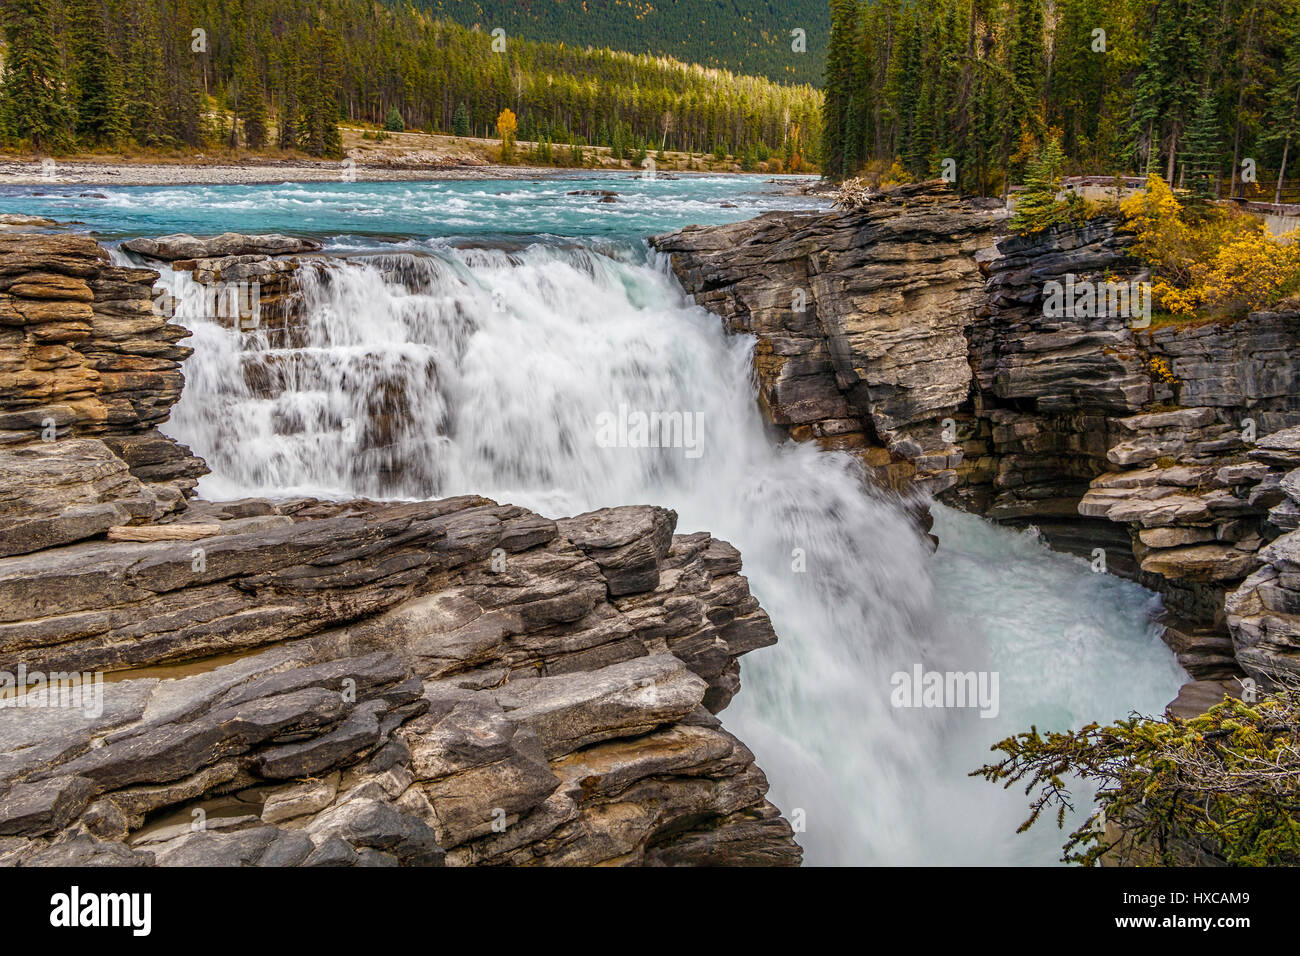 Athebasca Falls on the Athabasca River in Jasper National Park, Alberta, Canada. Stock Photo